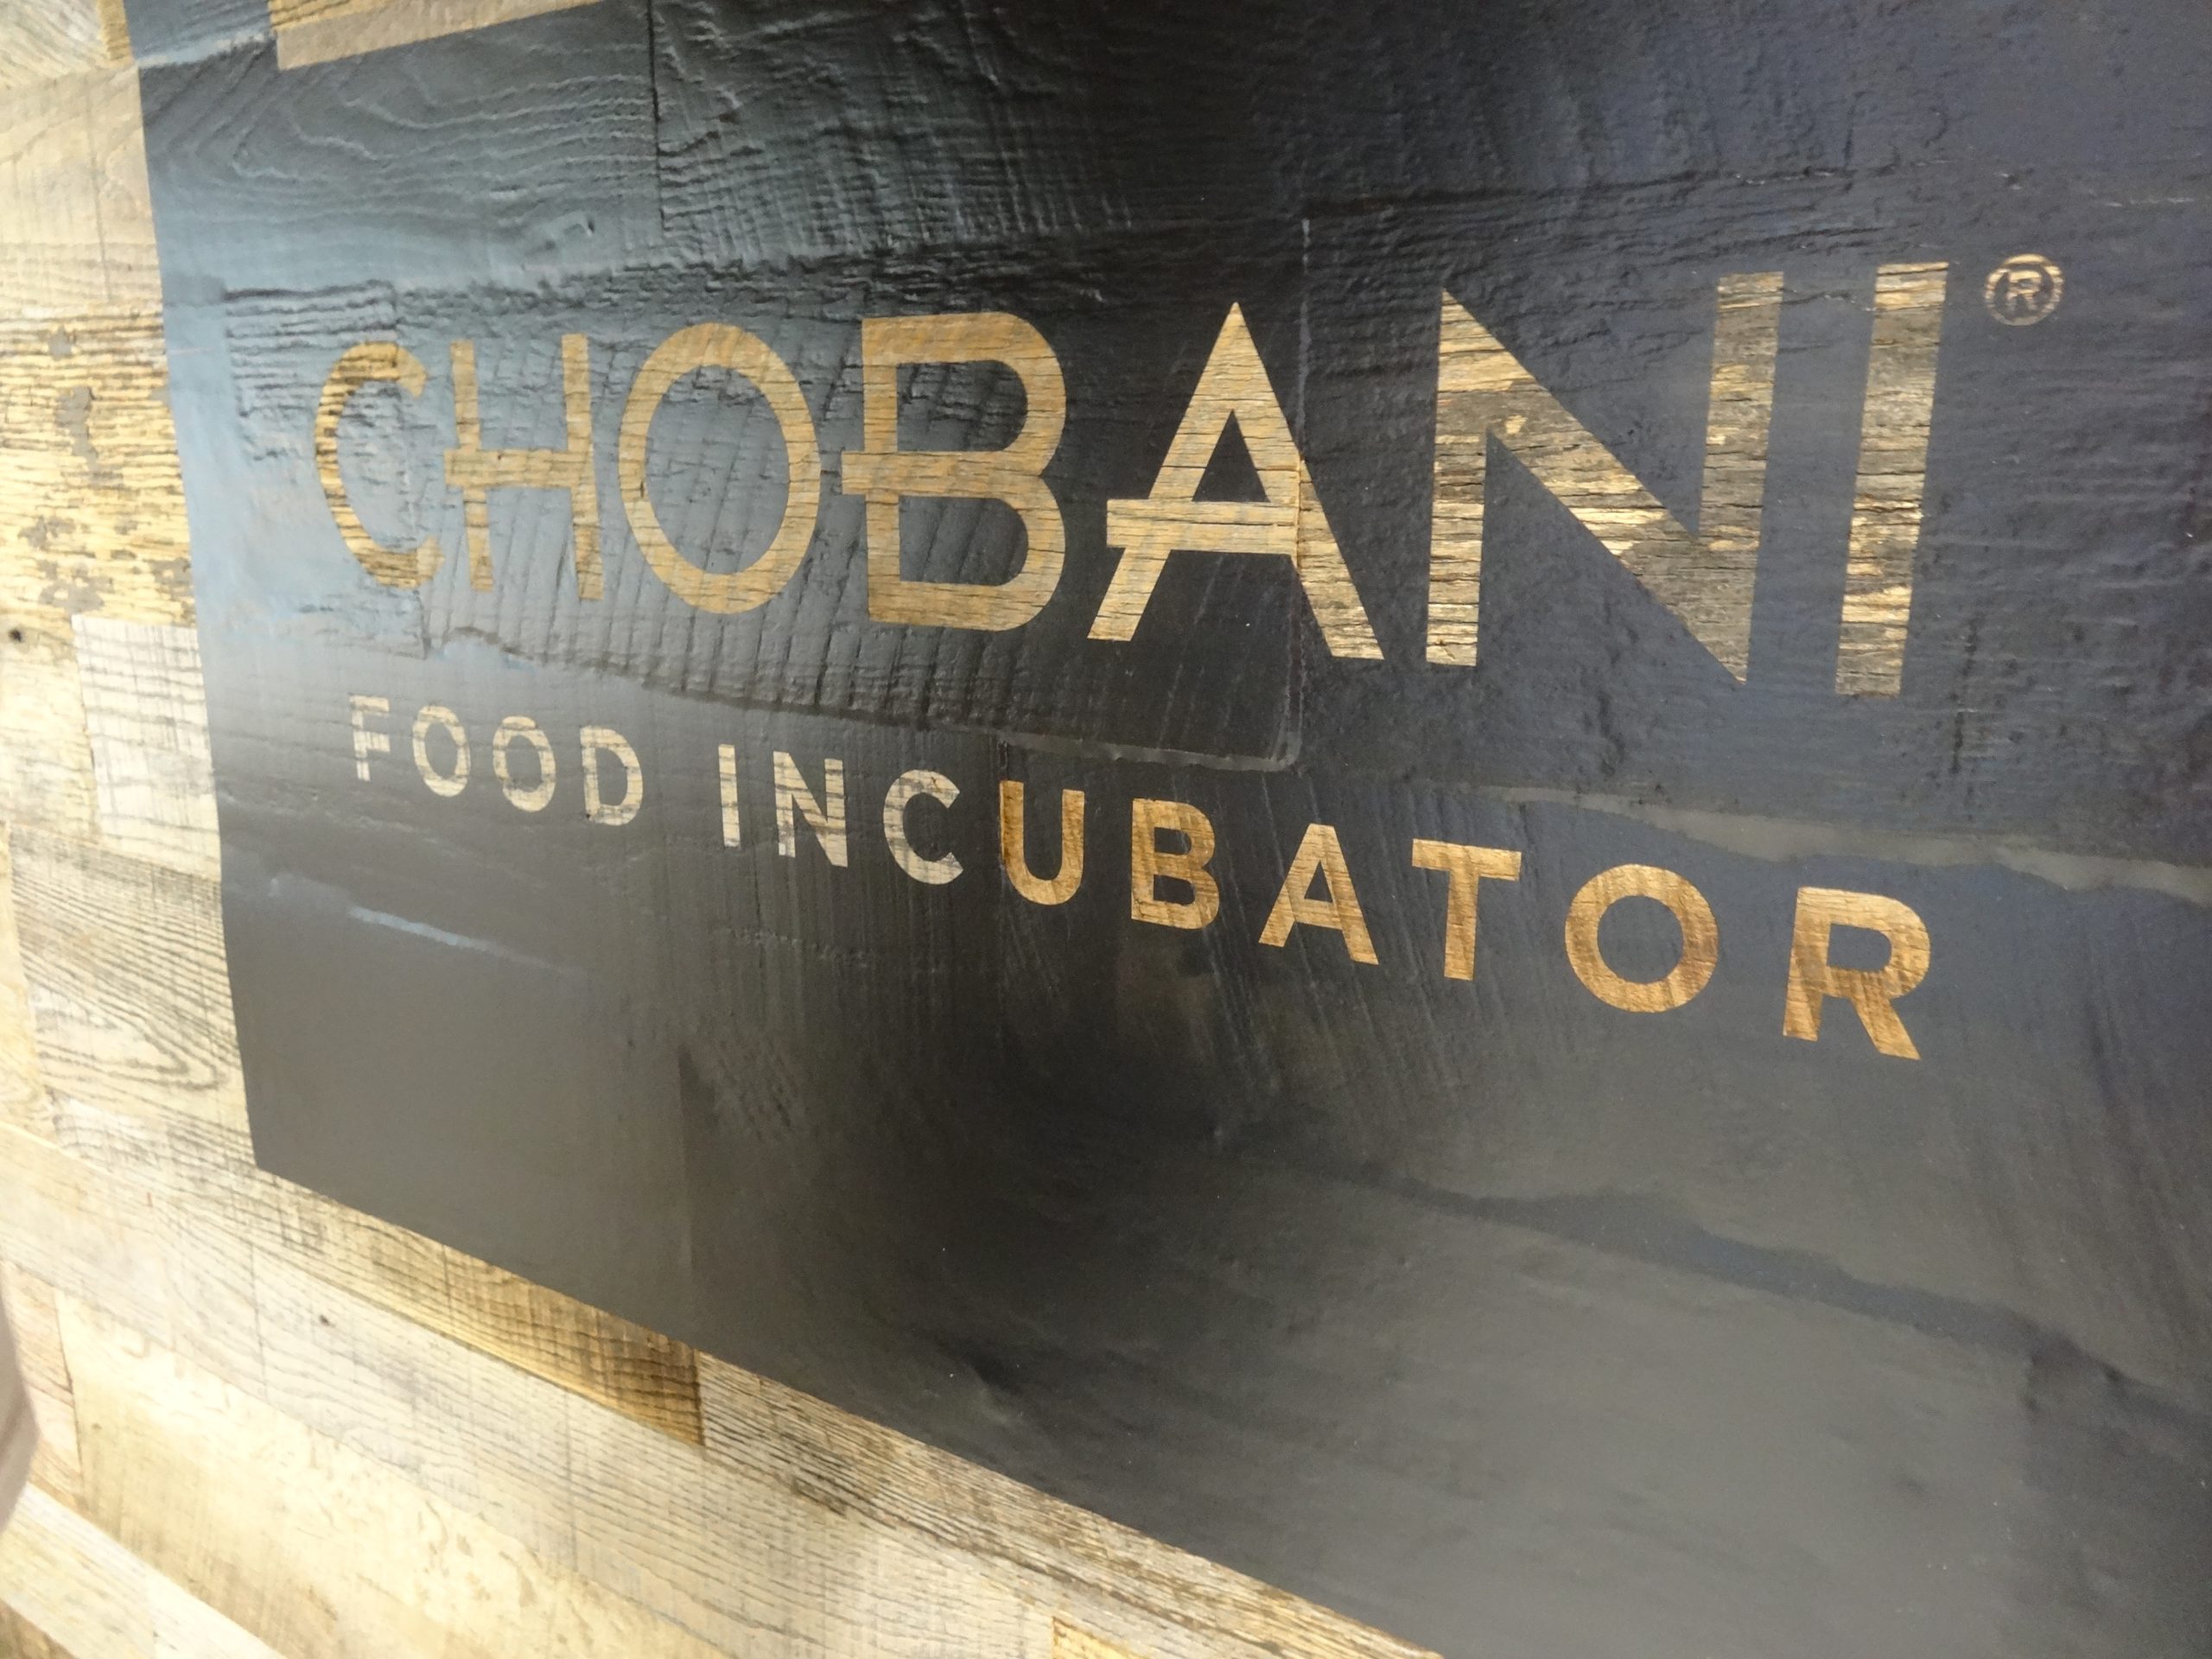 chobani food incubator hand painted sign makers nj city scaled